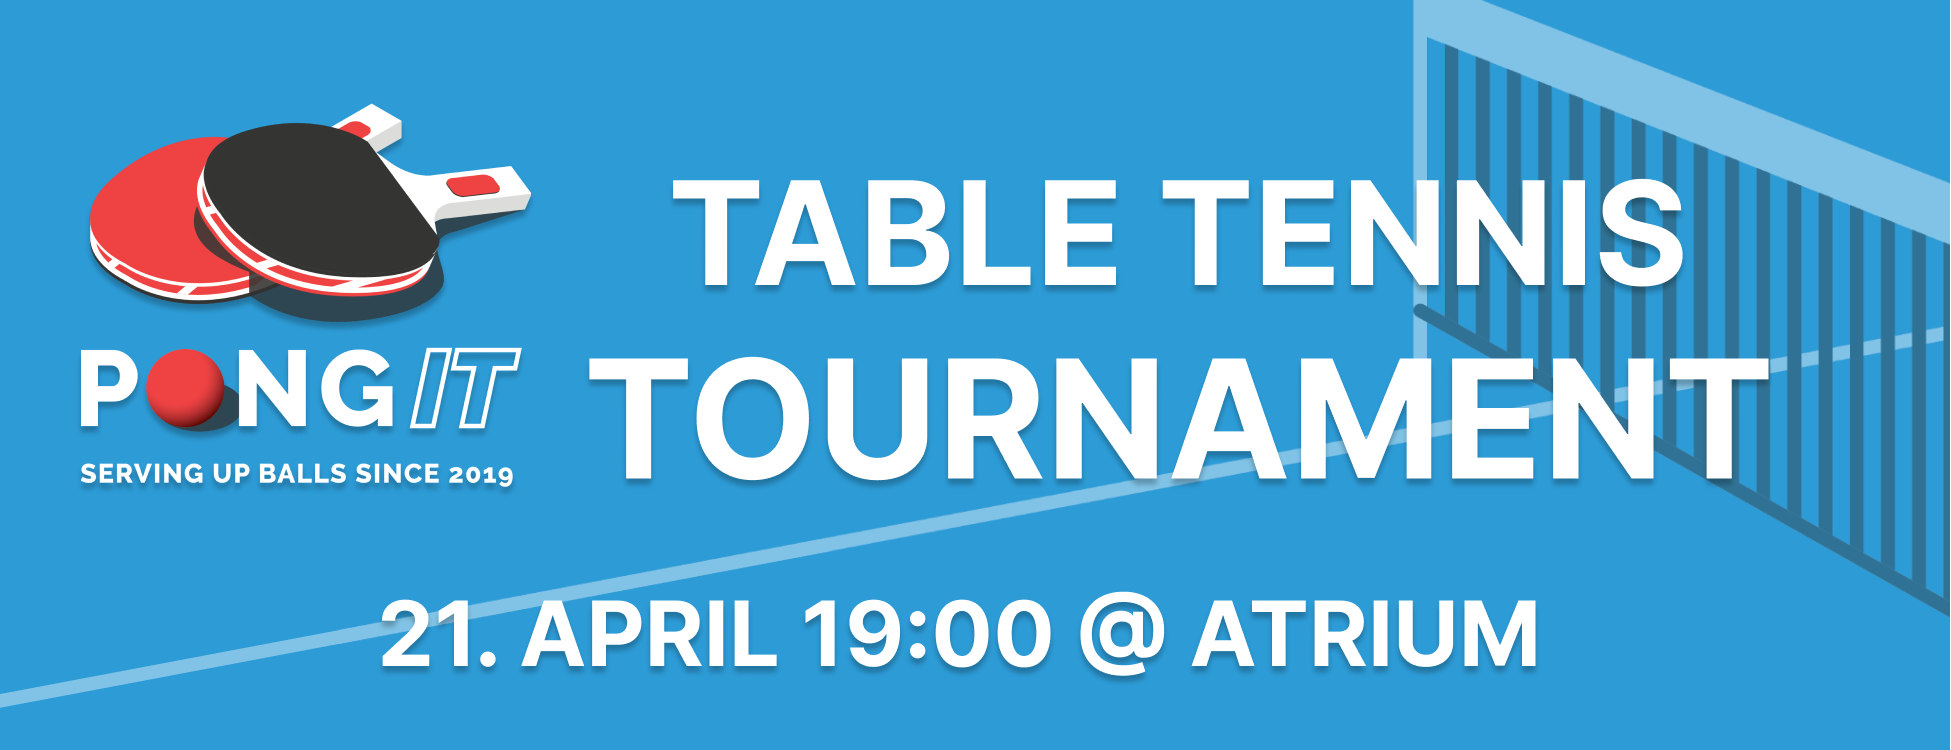 PongIT table tennis tournament!